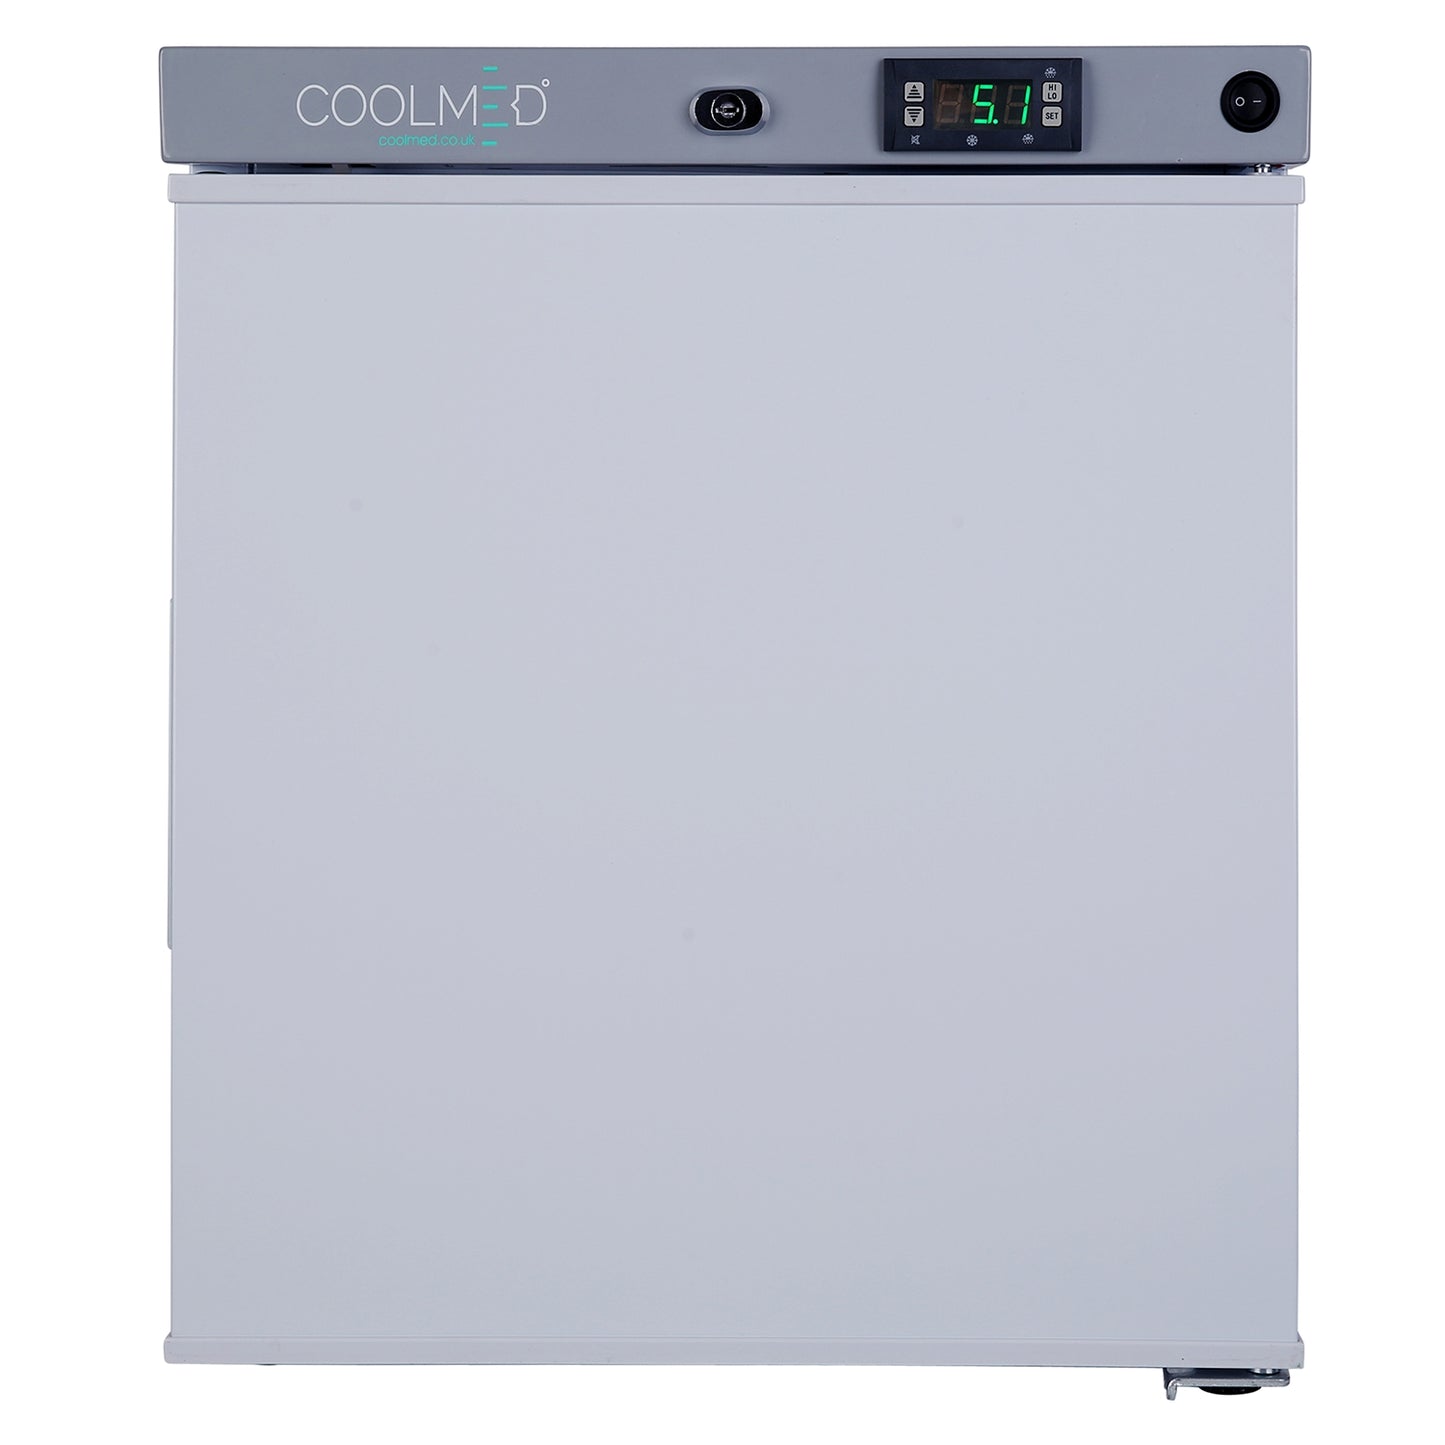 CoolMed Solid Door Refrigerator - 29 Litres - CMS29